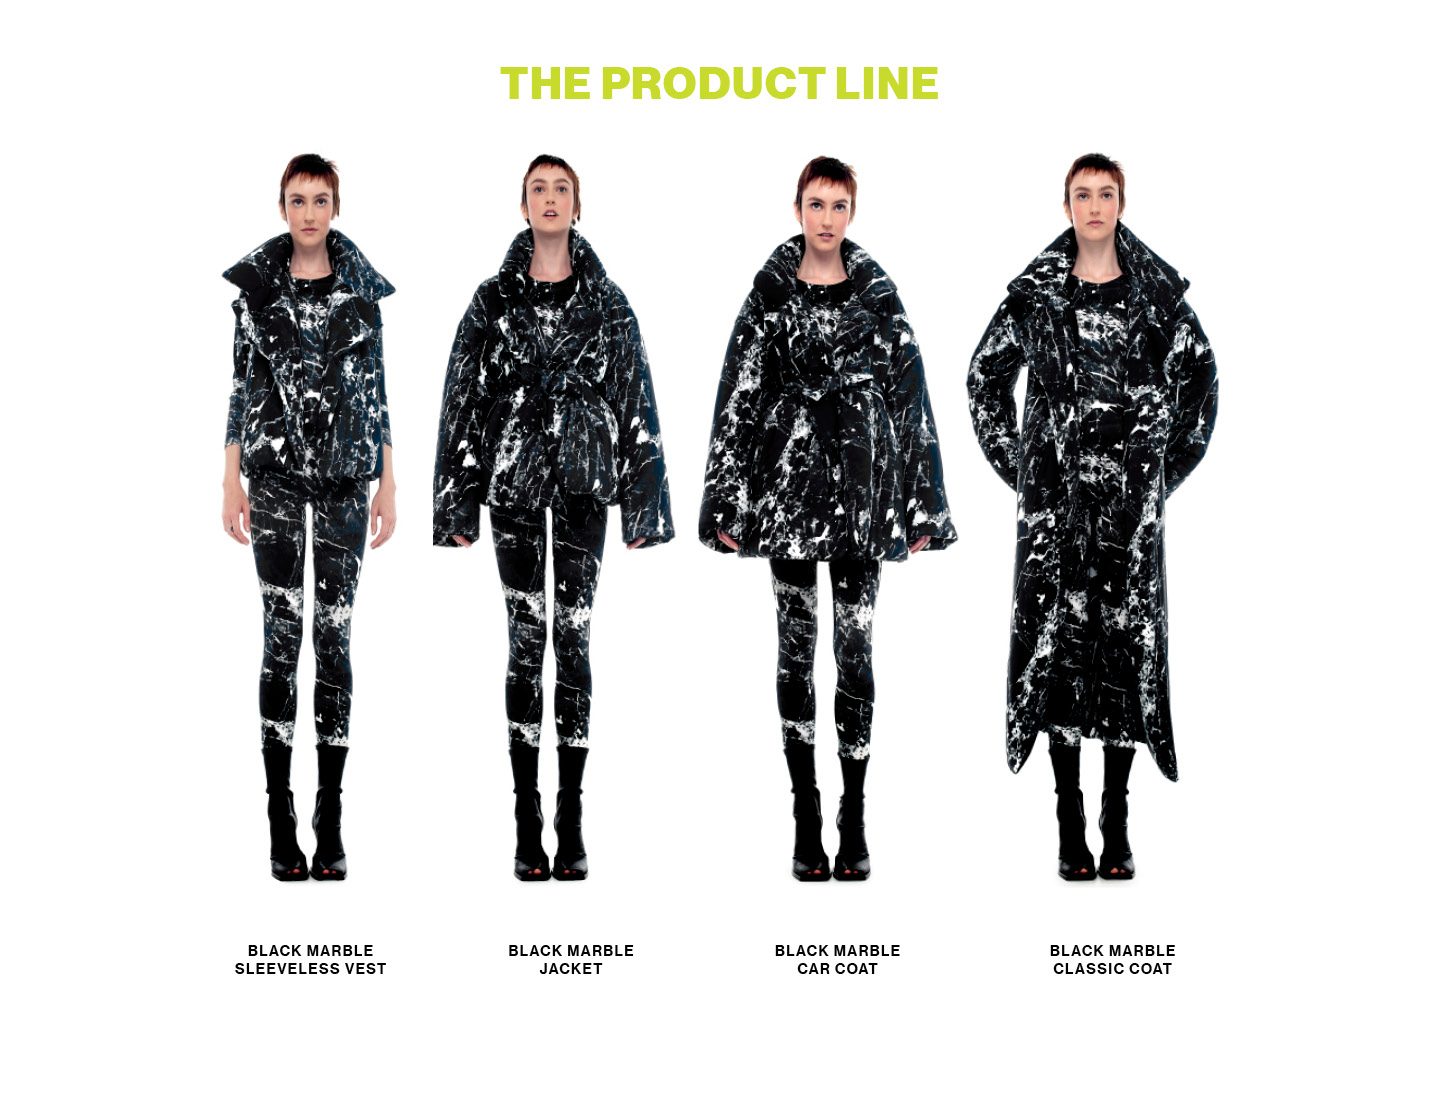 The Sleeping Bag Coat product line